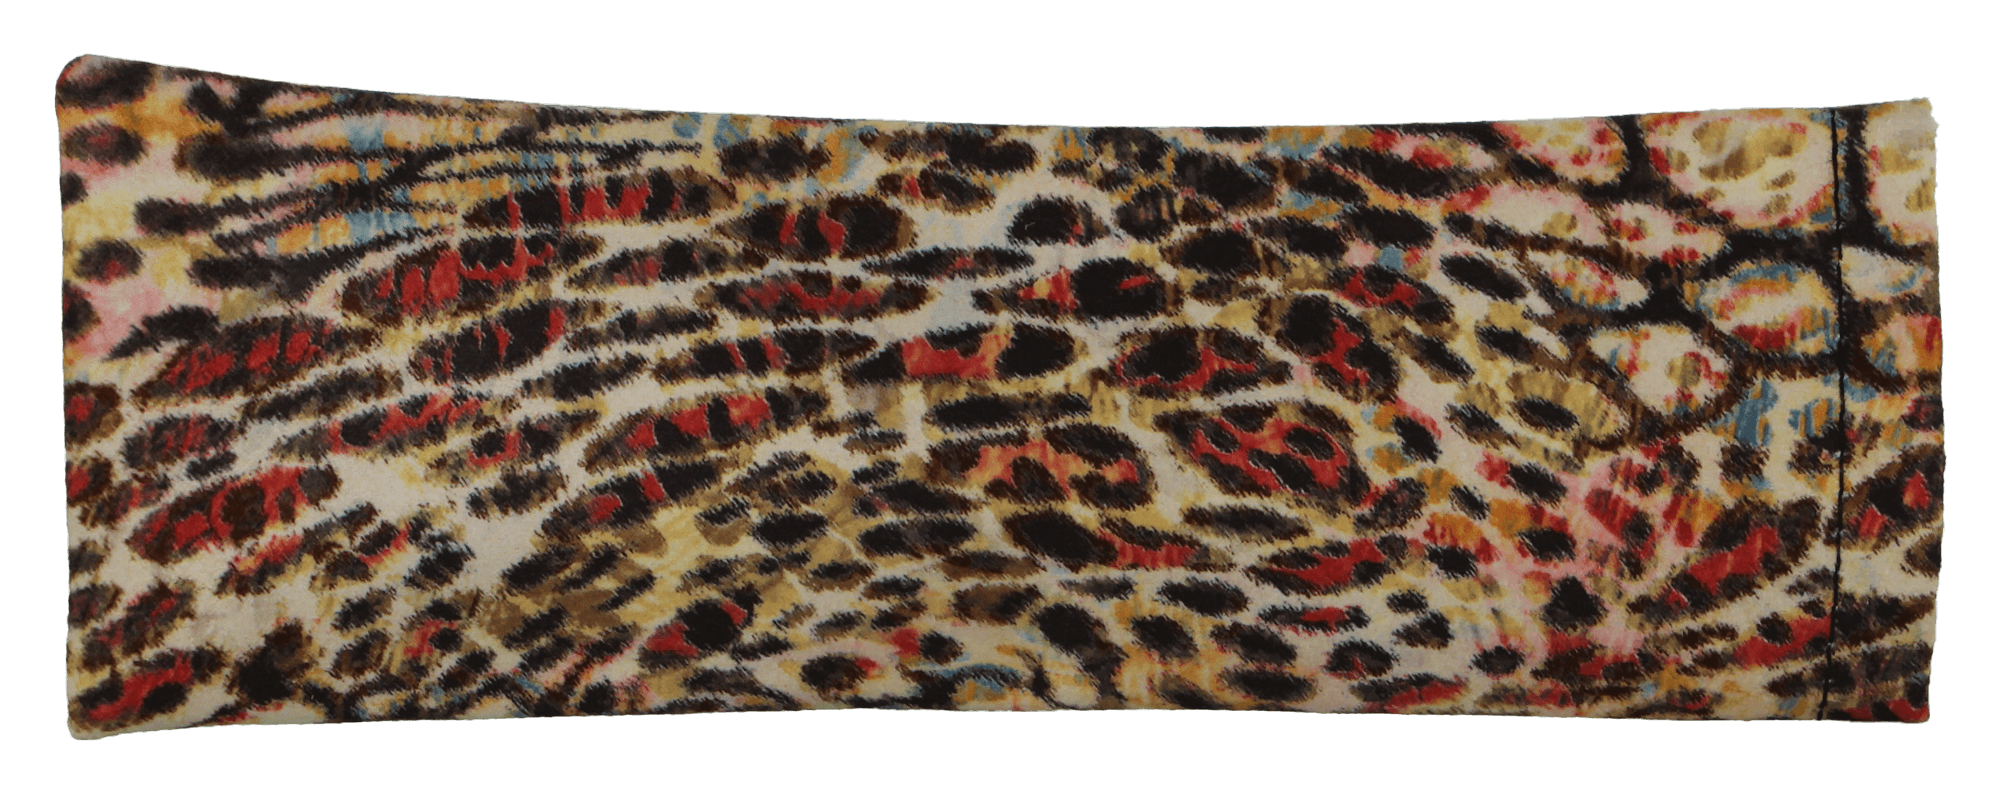 Fertiglesebrille 04891 Leoparden-Print matt +2,00 Dioptrien